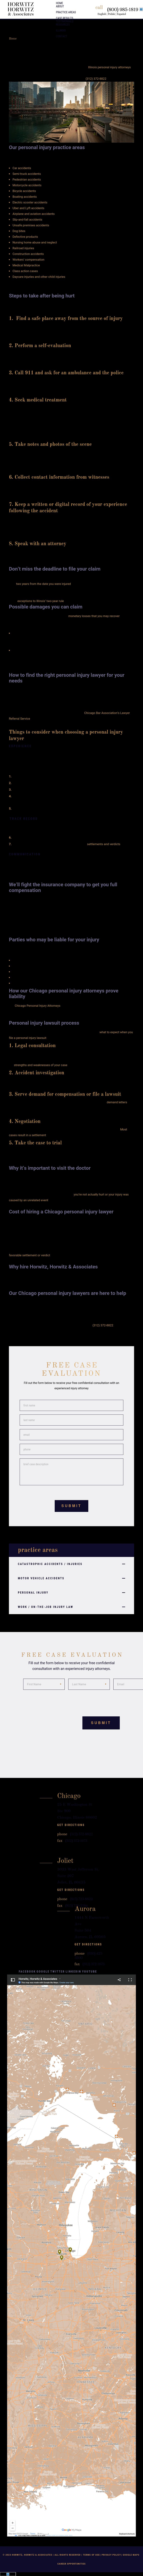 Horwitz, Horwitz & Associates, LTD - Chicago IL Lawyers